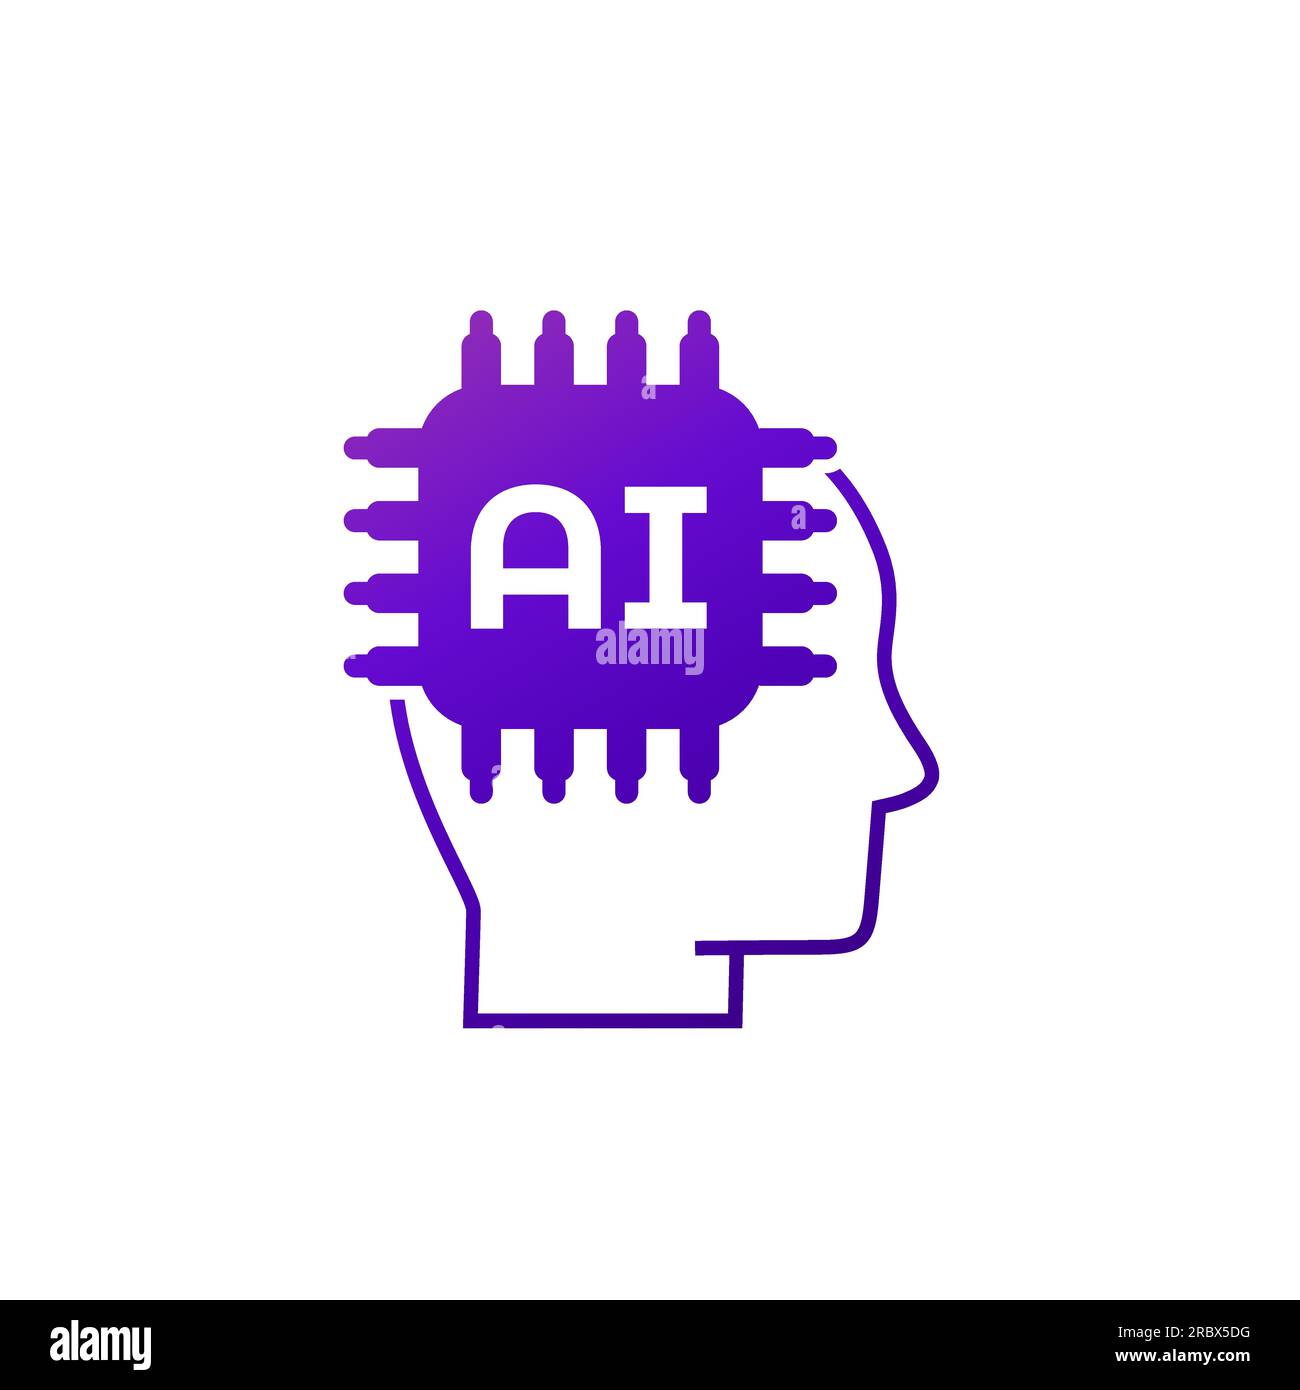 AI technology icon, Artificial Intelligence vector Stock Vector